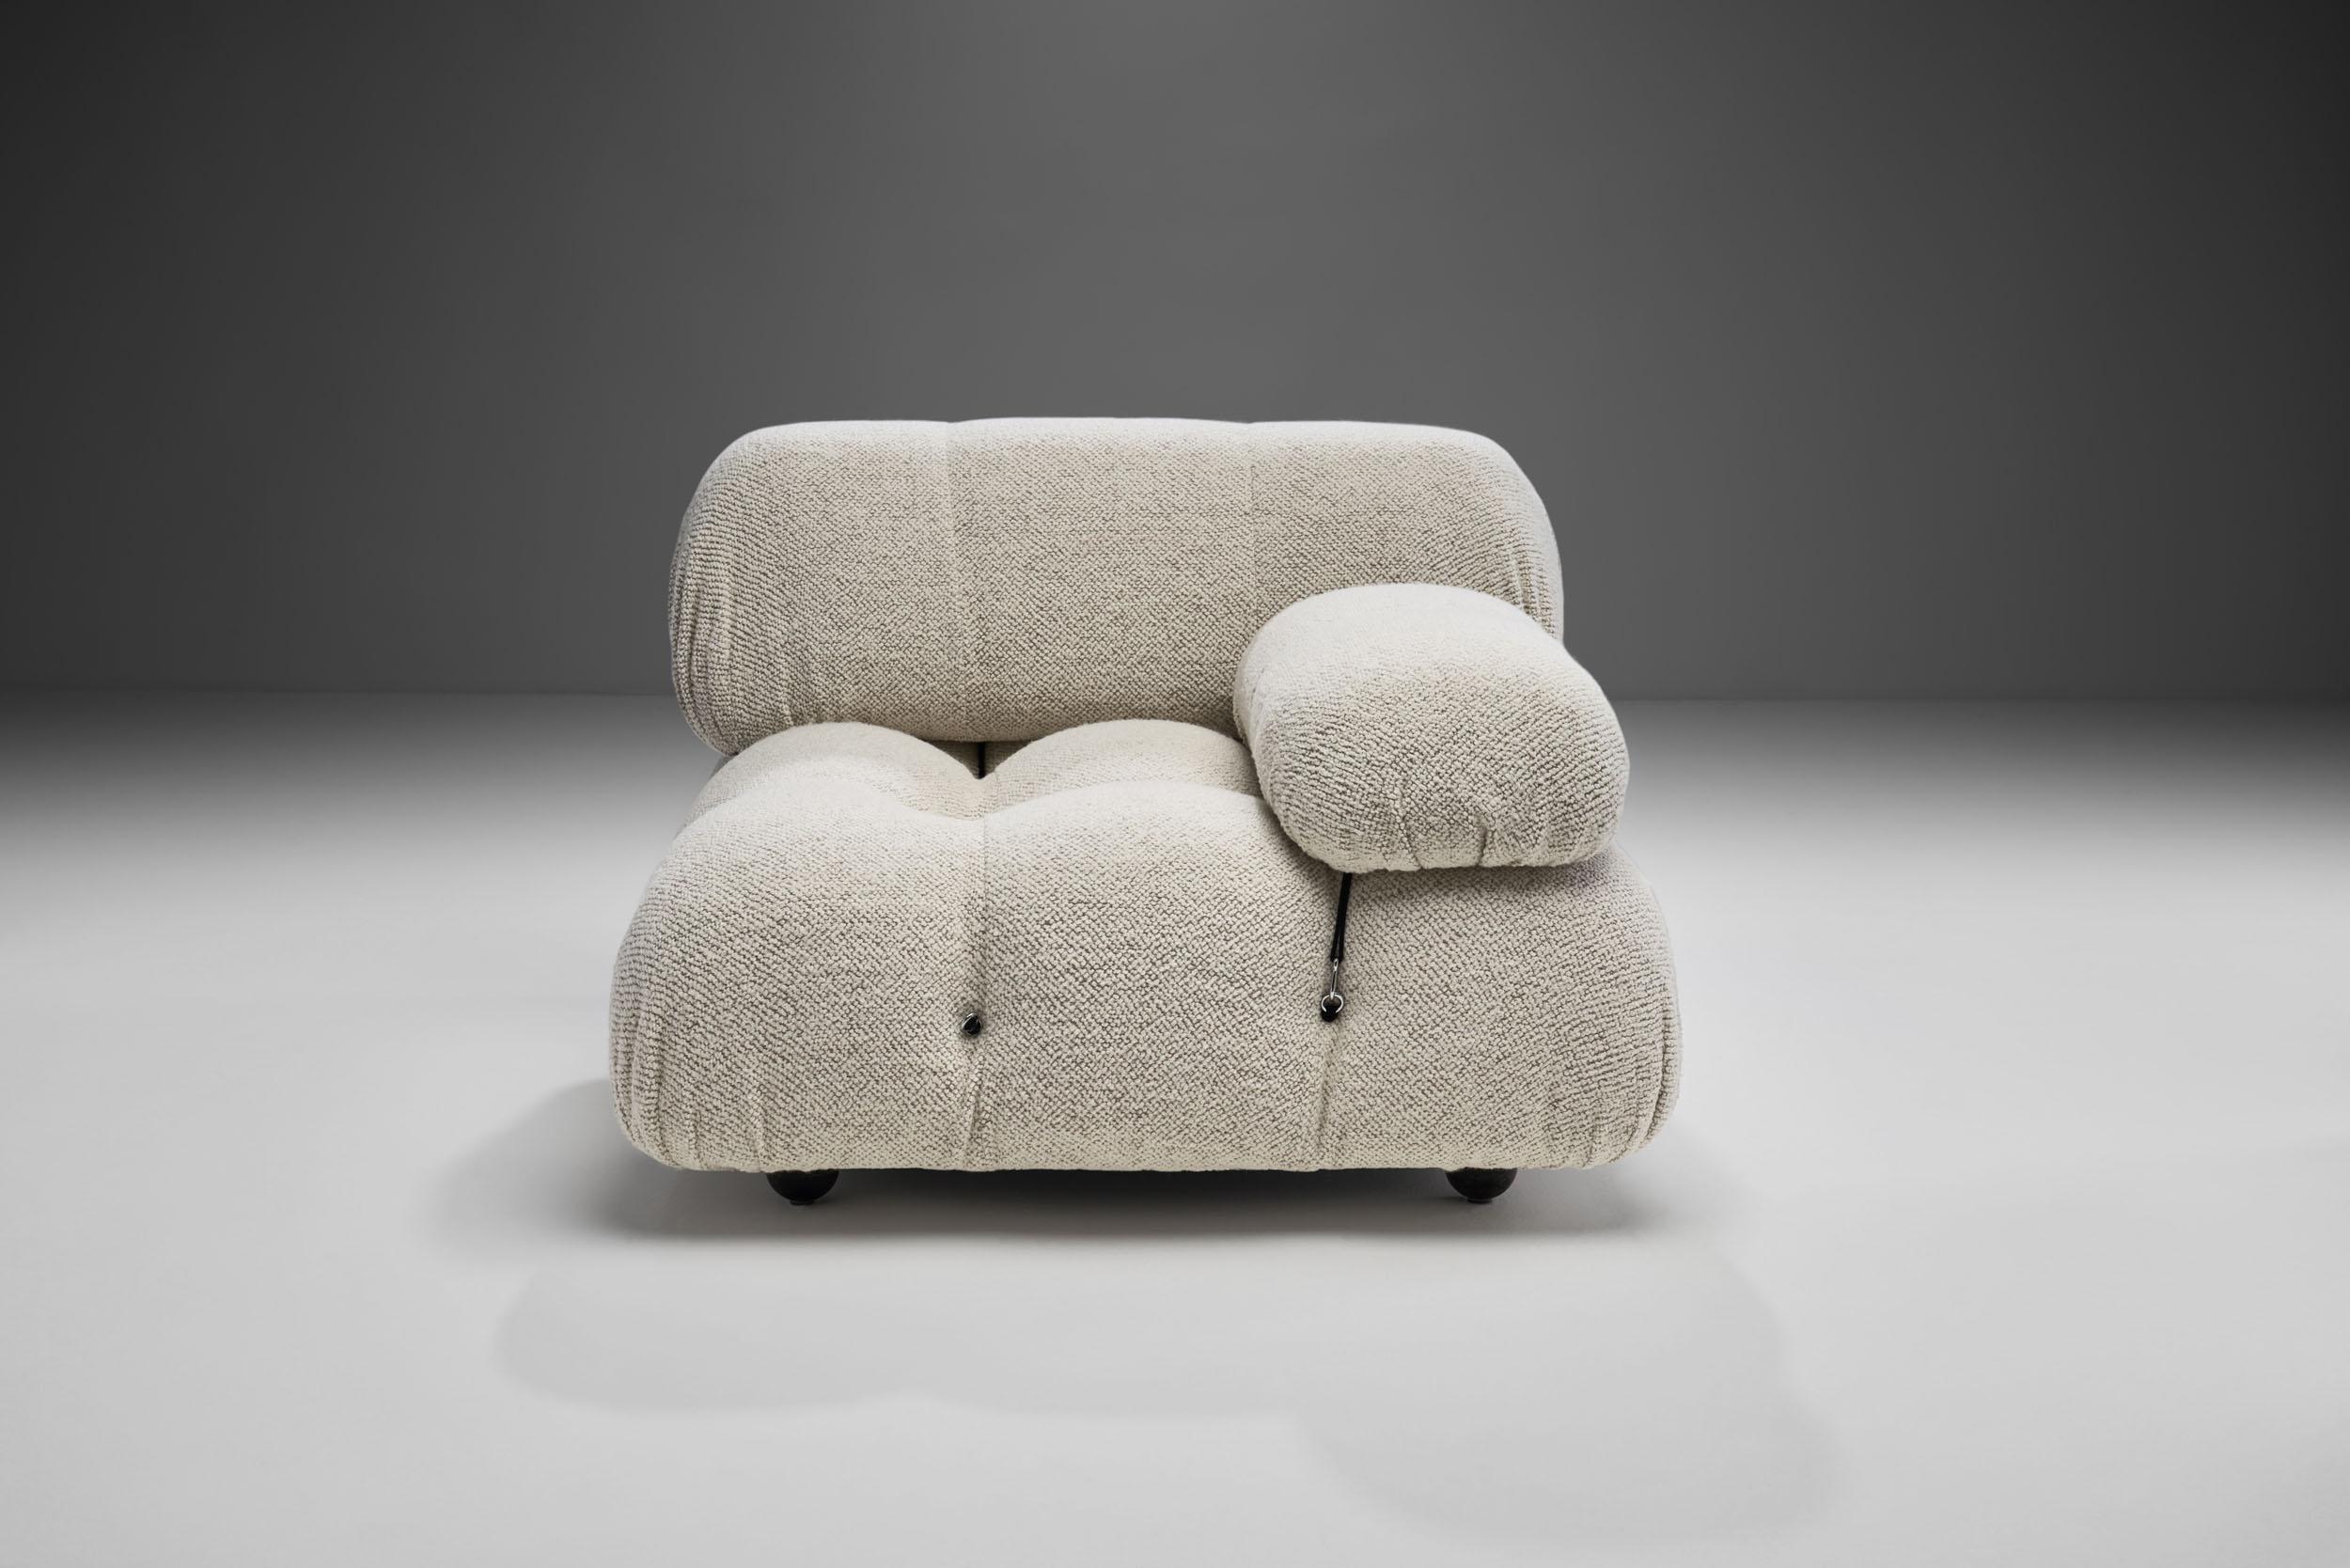 Late 20th Century “Camaleonda” Modular Sofa in 3 Segments by Mario Bellini for B&B, Italy 1971 For Sale